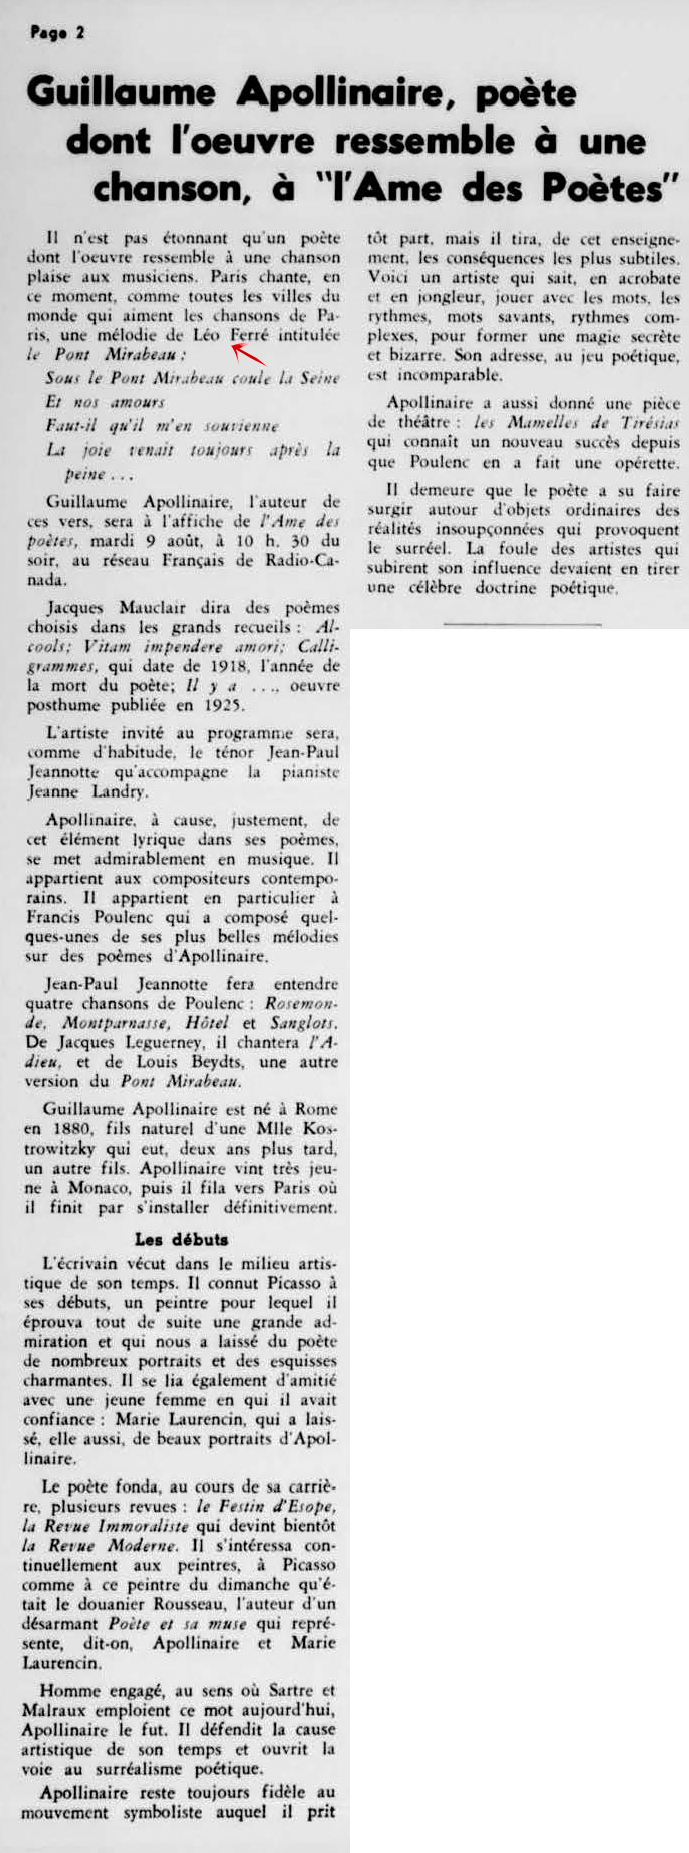 Léo Ferré - La semaine à Radio-Canada, dimanche 7 août 1955